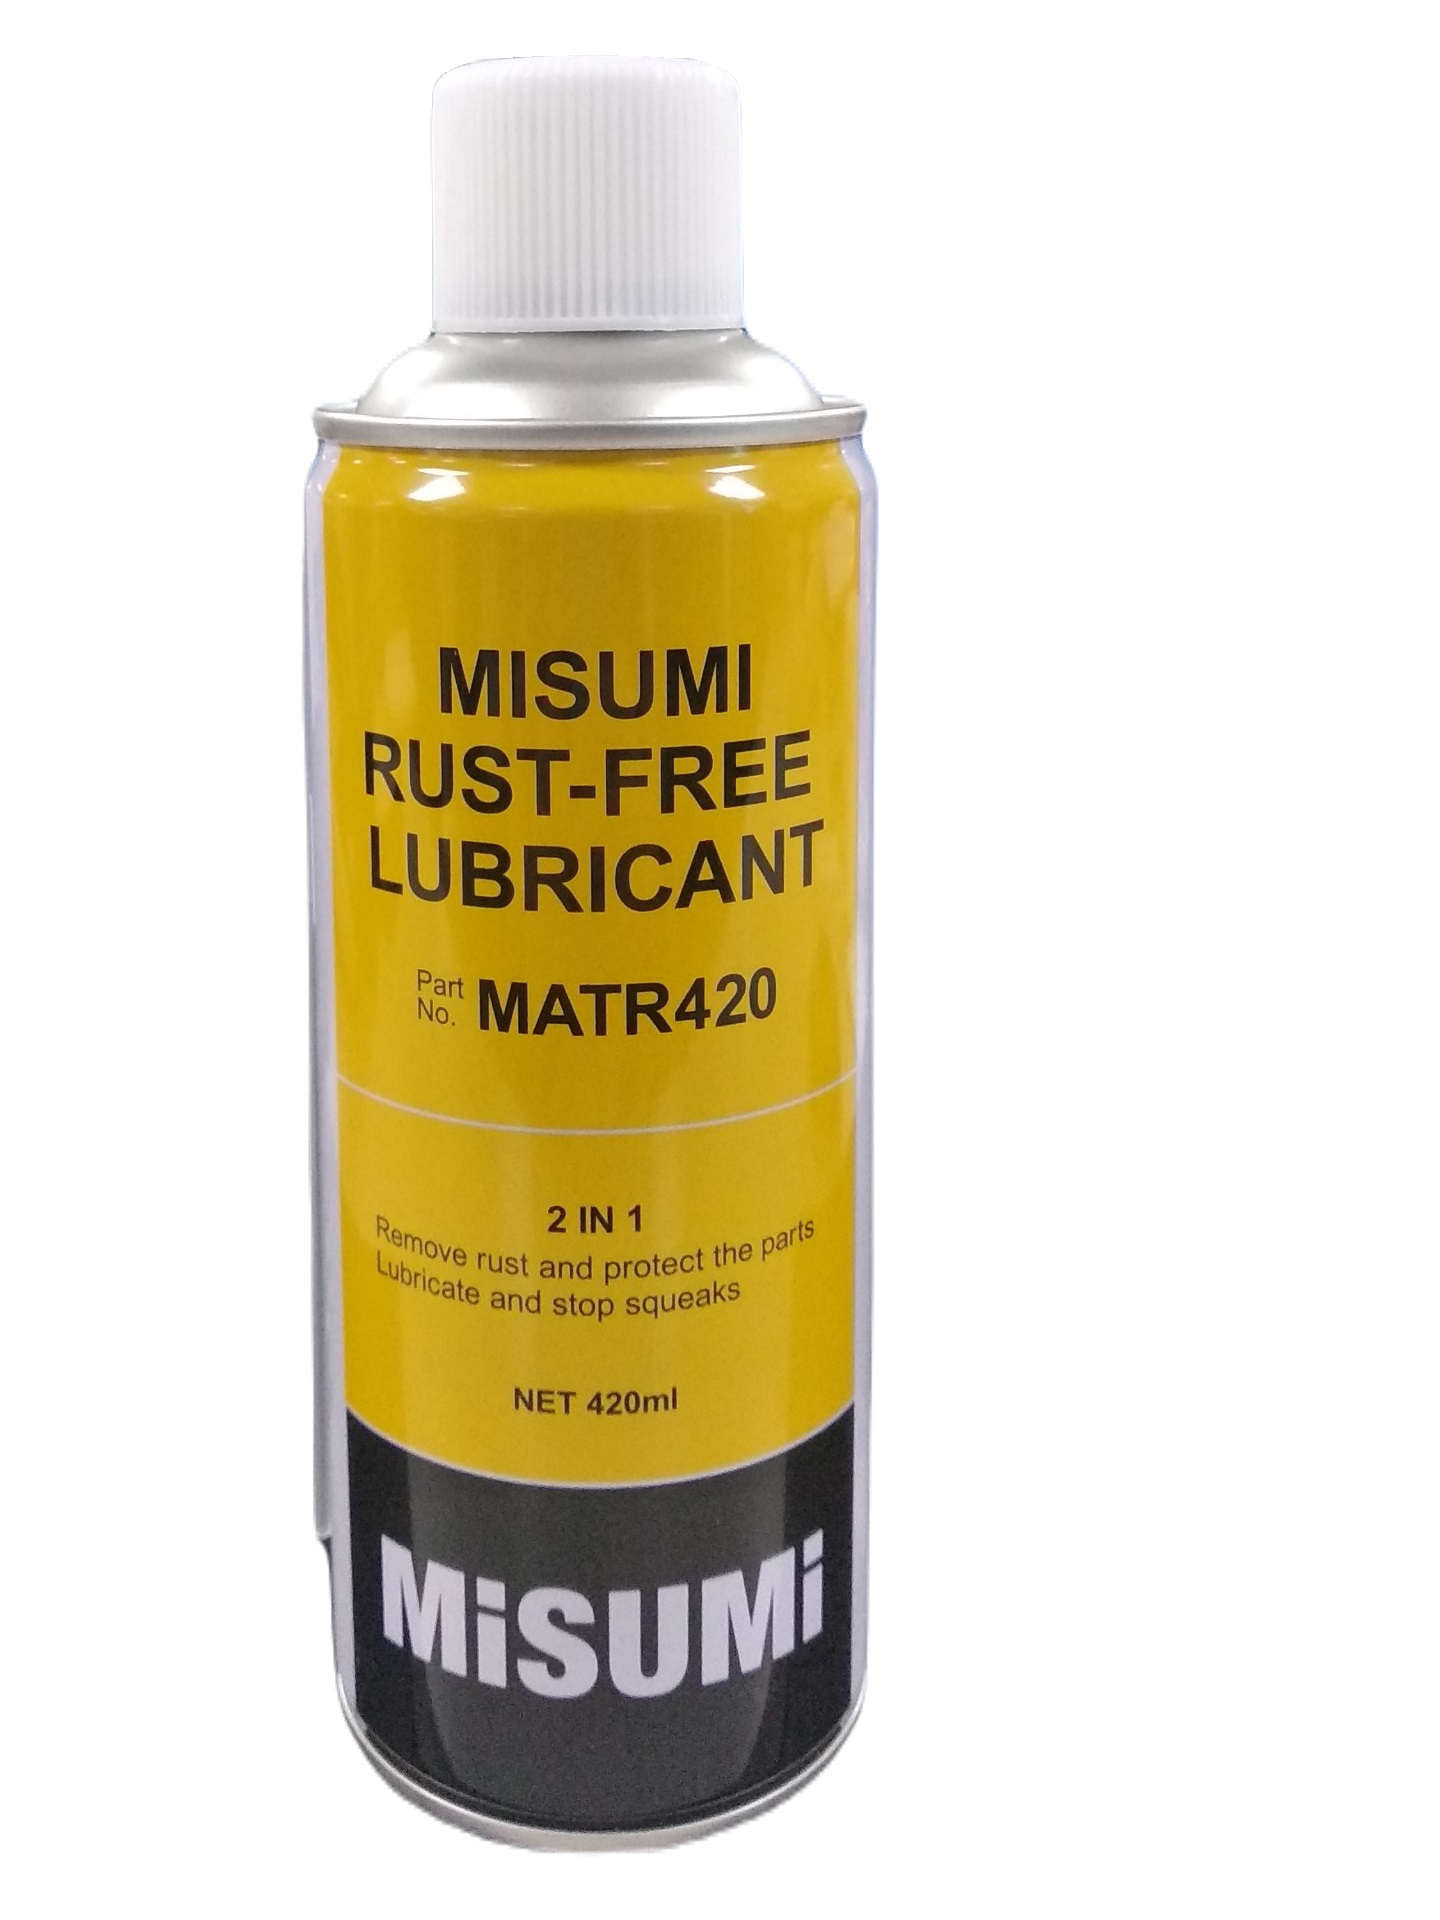 Rust-free Lubricant (MATR420)